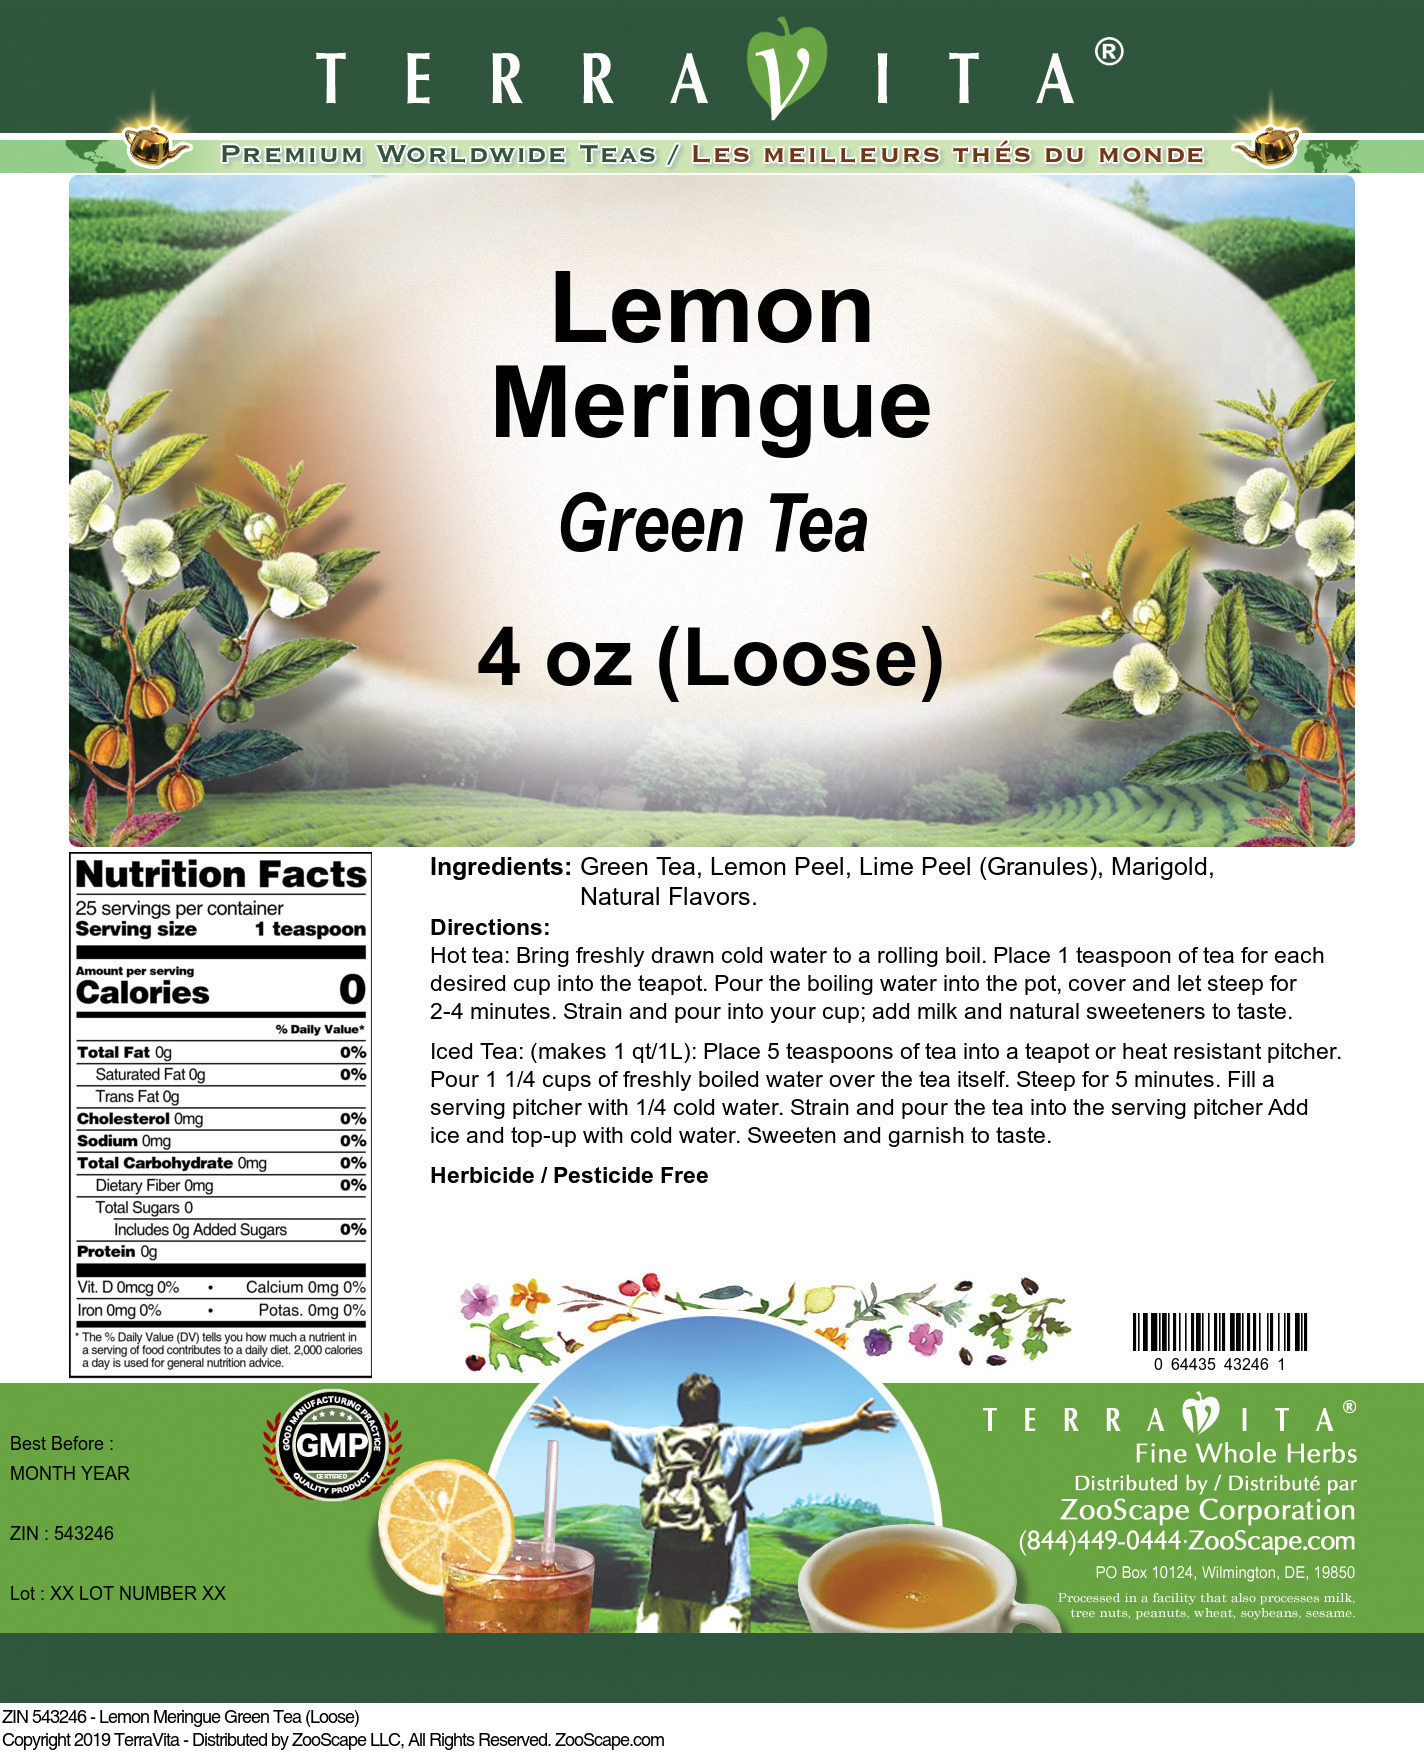 Lemon Meringue Green Tea (Loose) - Label